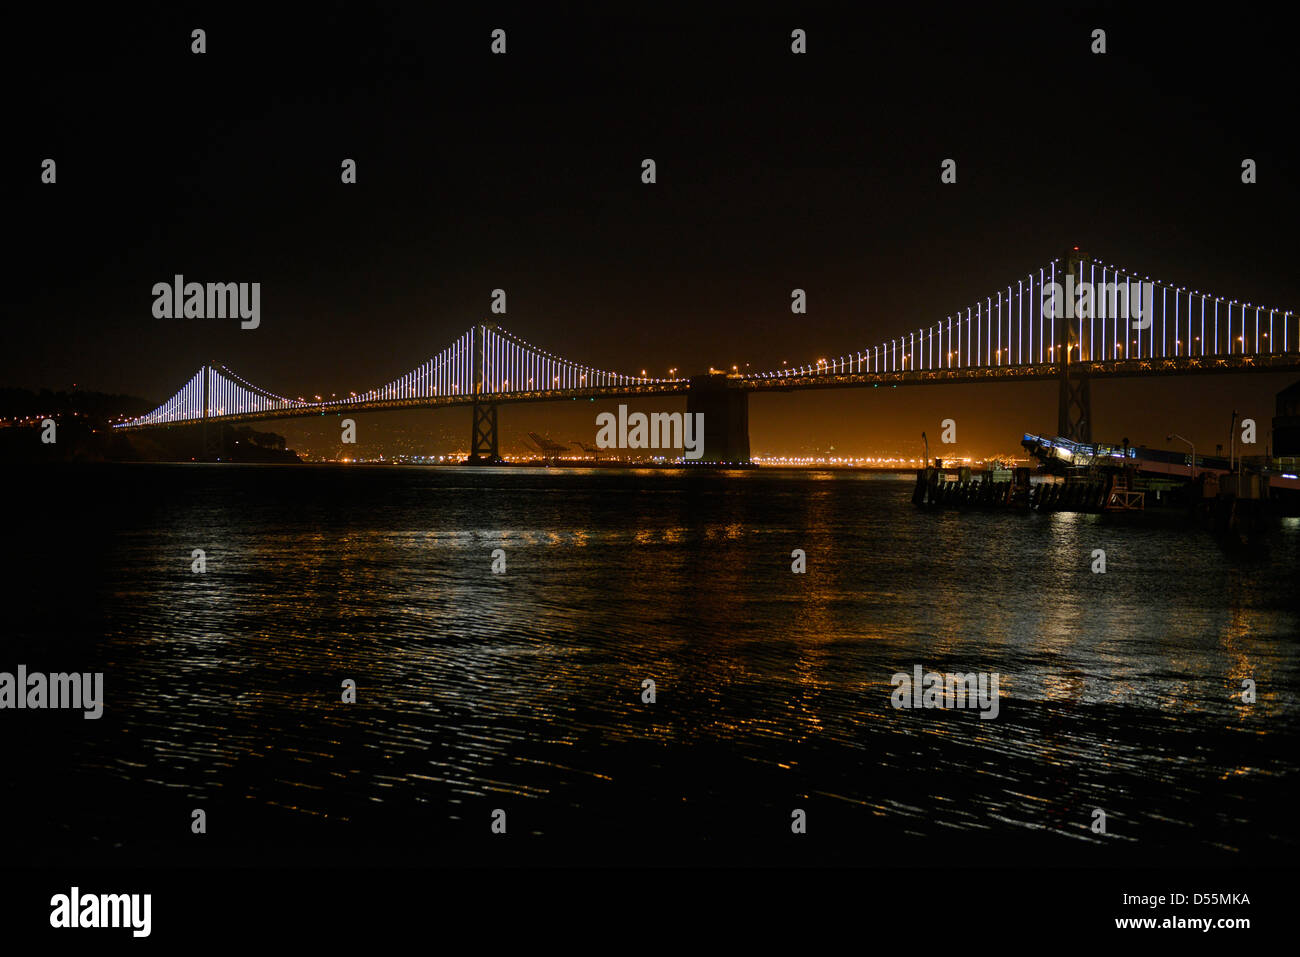 'The Bay Lights', a 25,000 LED light display on Bay Bridge in San Francisco, CA. Stock Photo